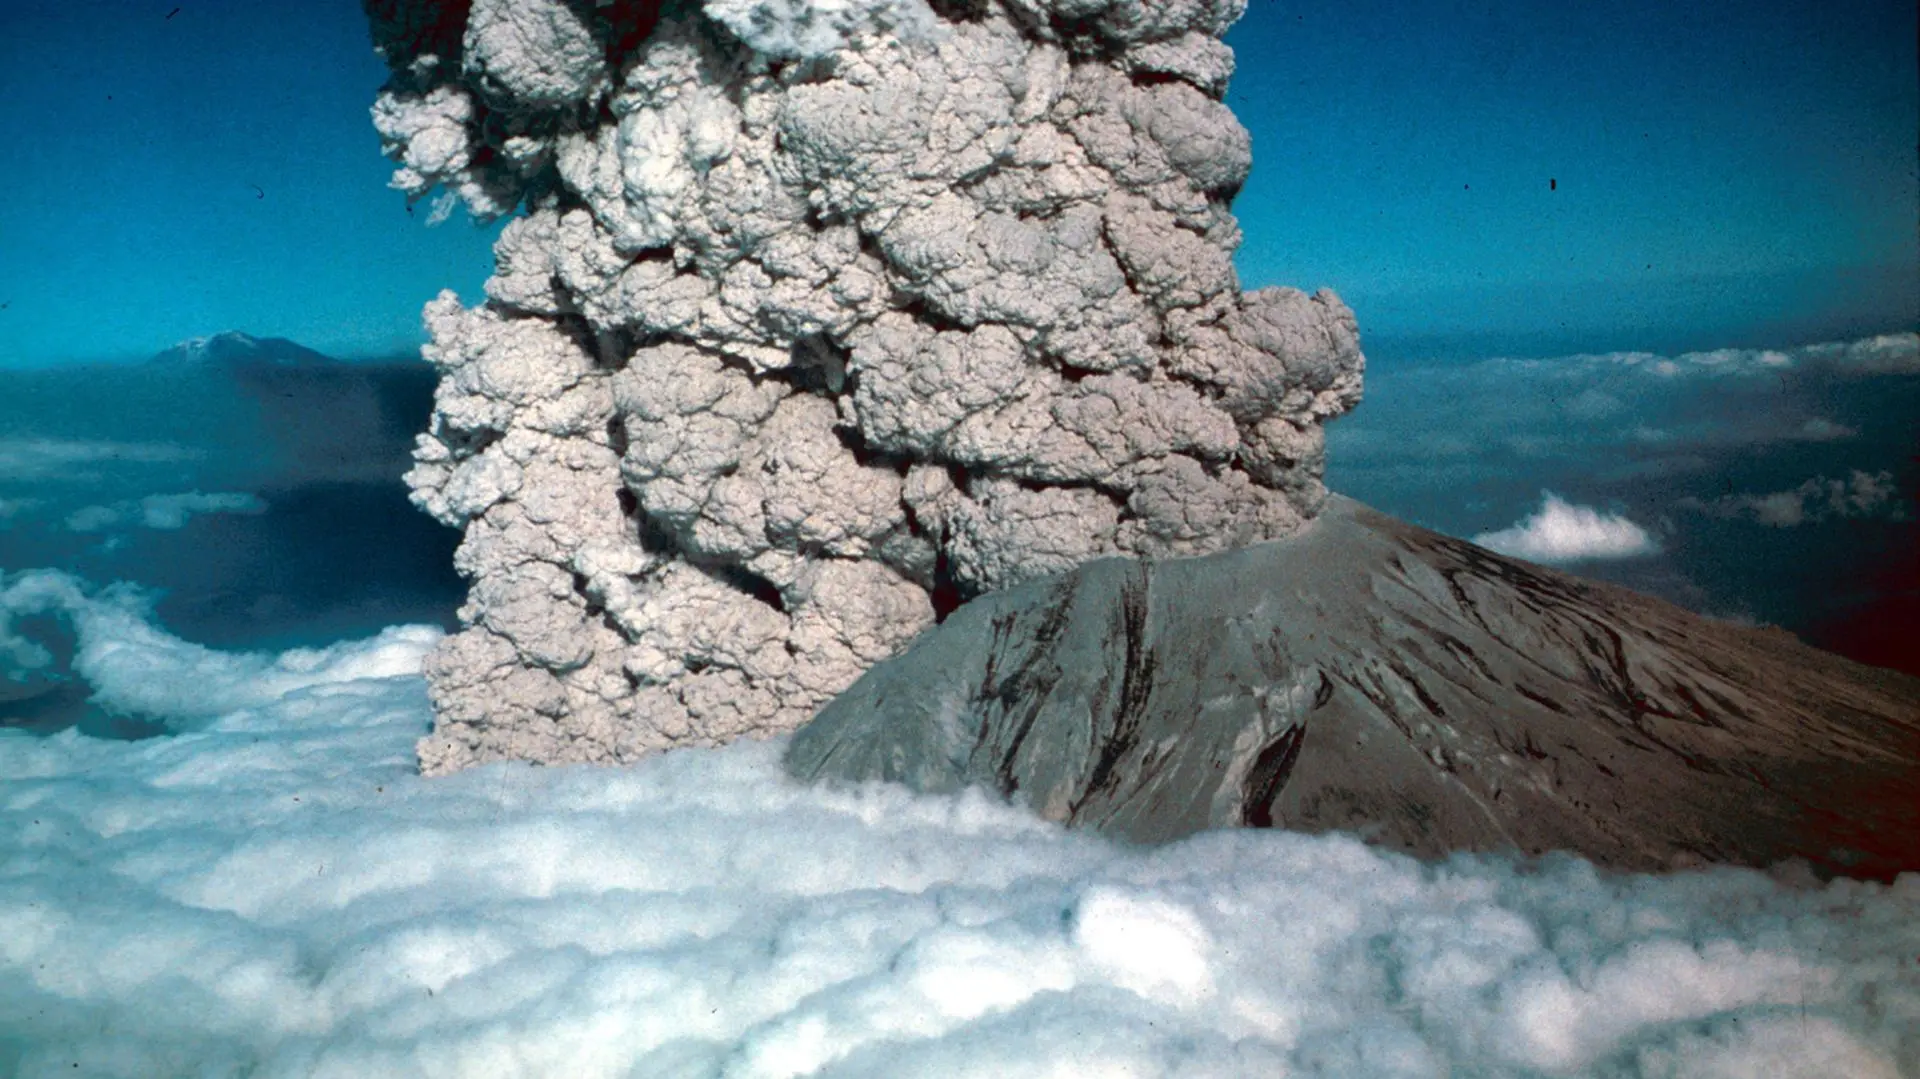 The Eruption of Mount St. Helens!_peliplat